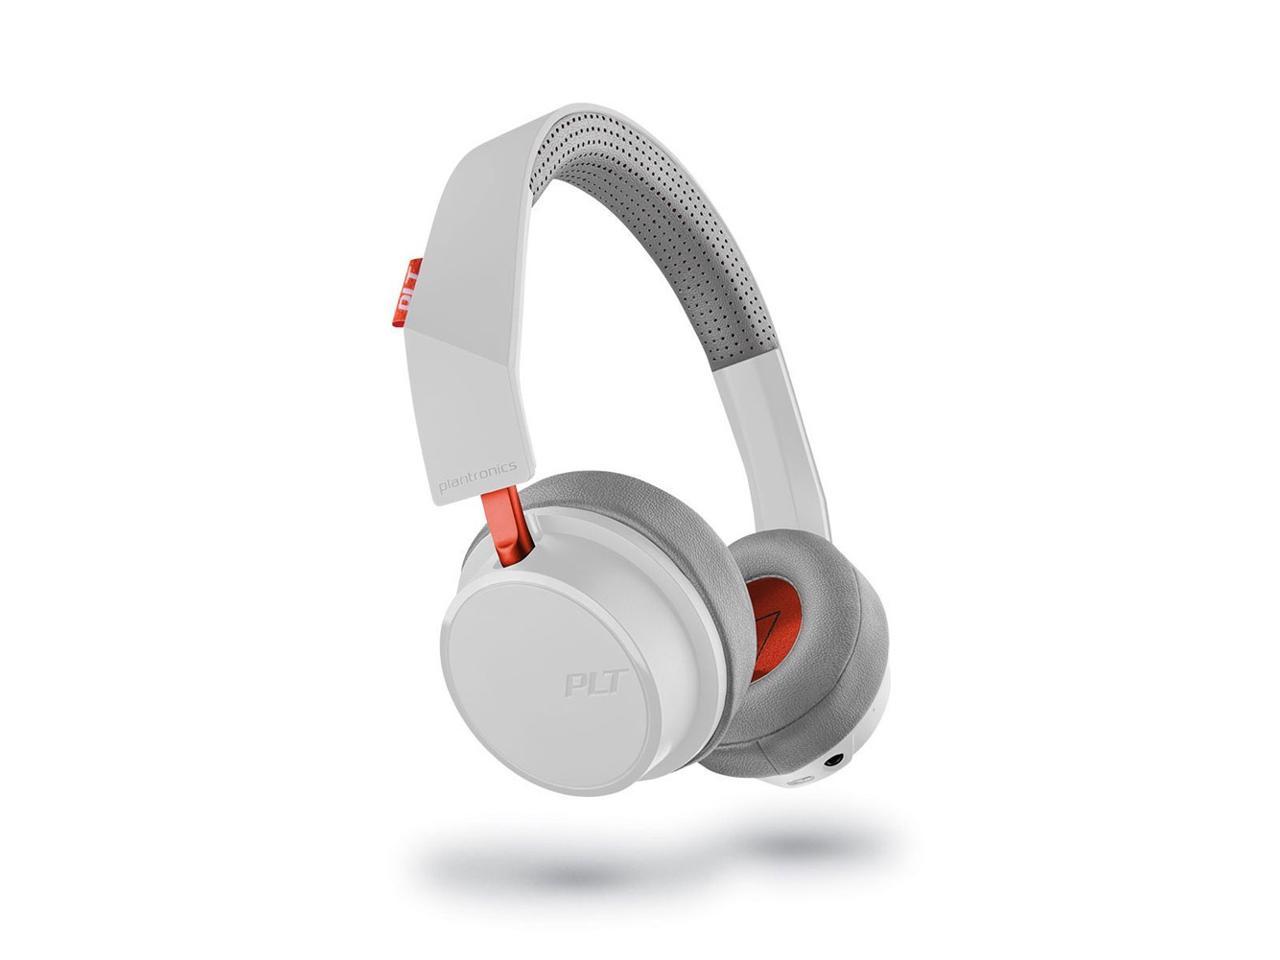 Plantronics Backbeat 500 Series Bluetooth Wireless Headphones $21.99